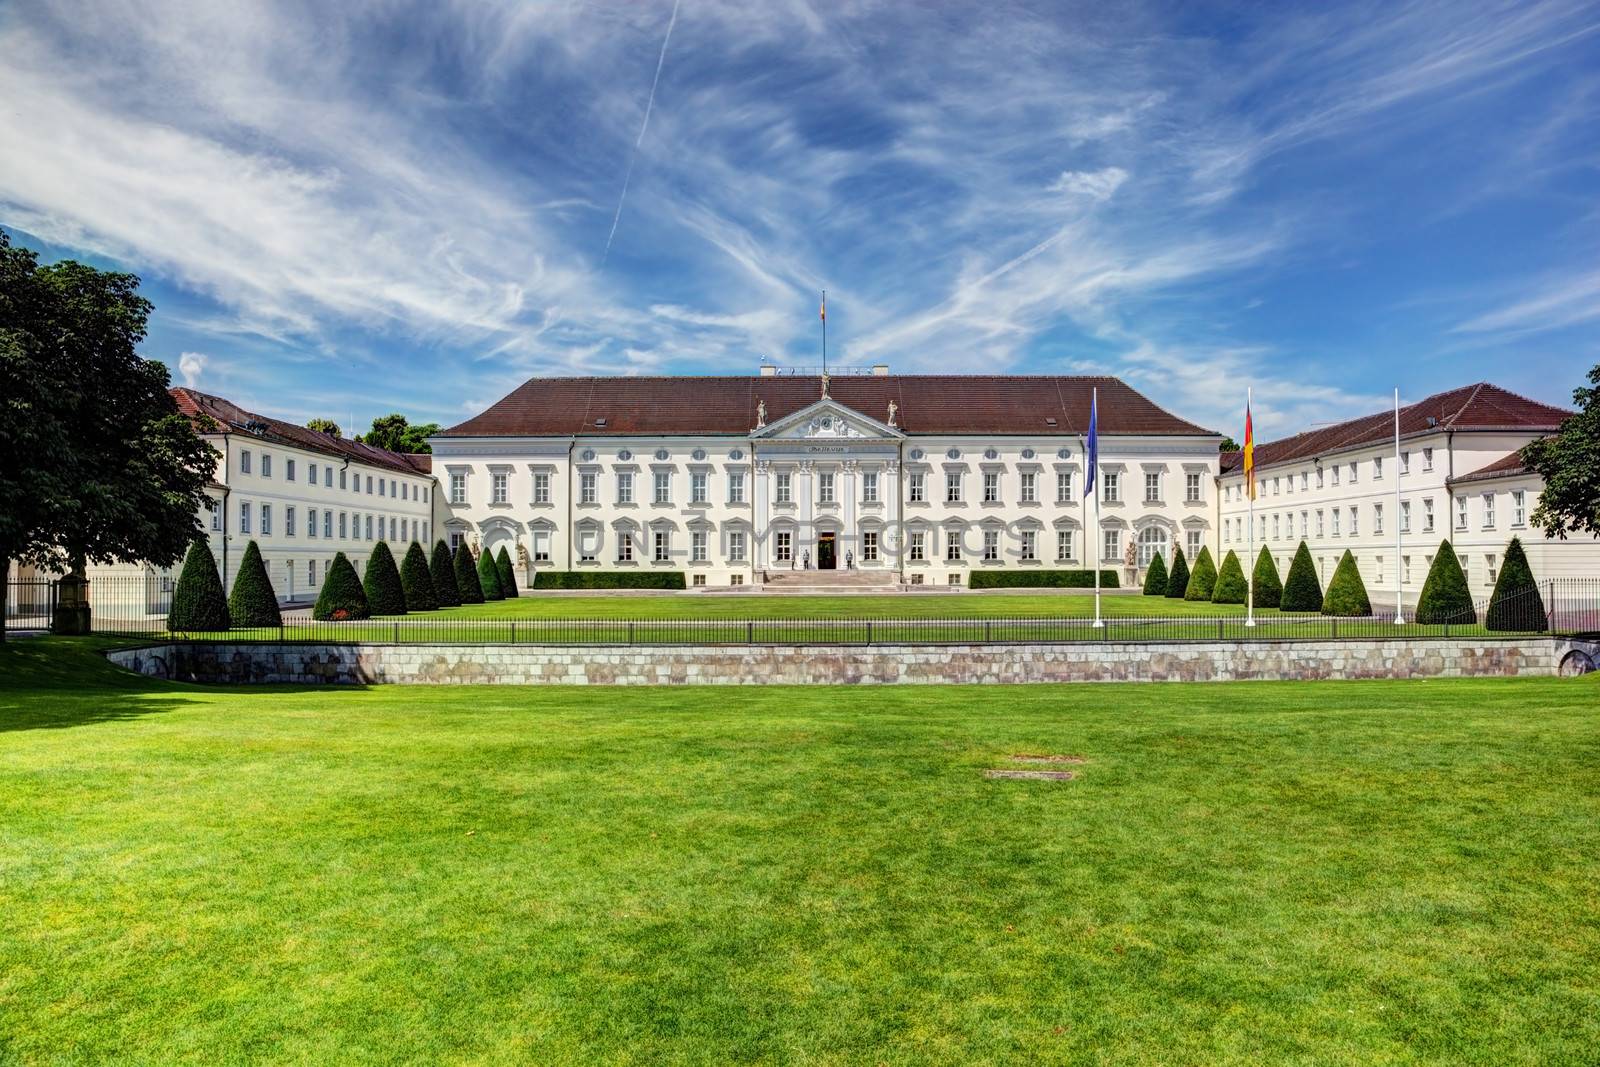 Schloss Bellevue, the Presidential palace in Berlin, Germany